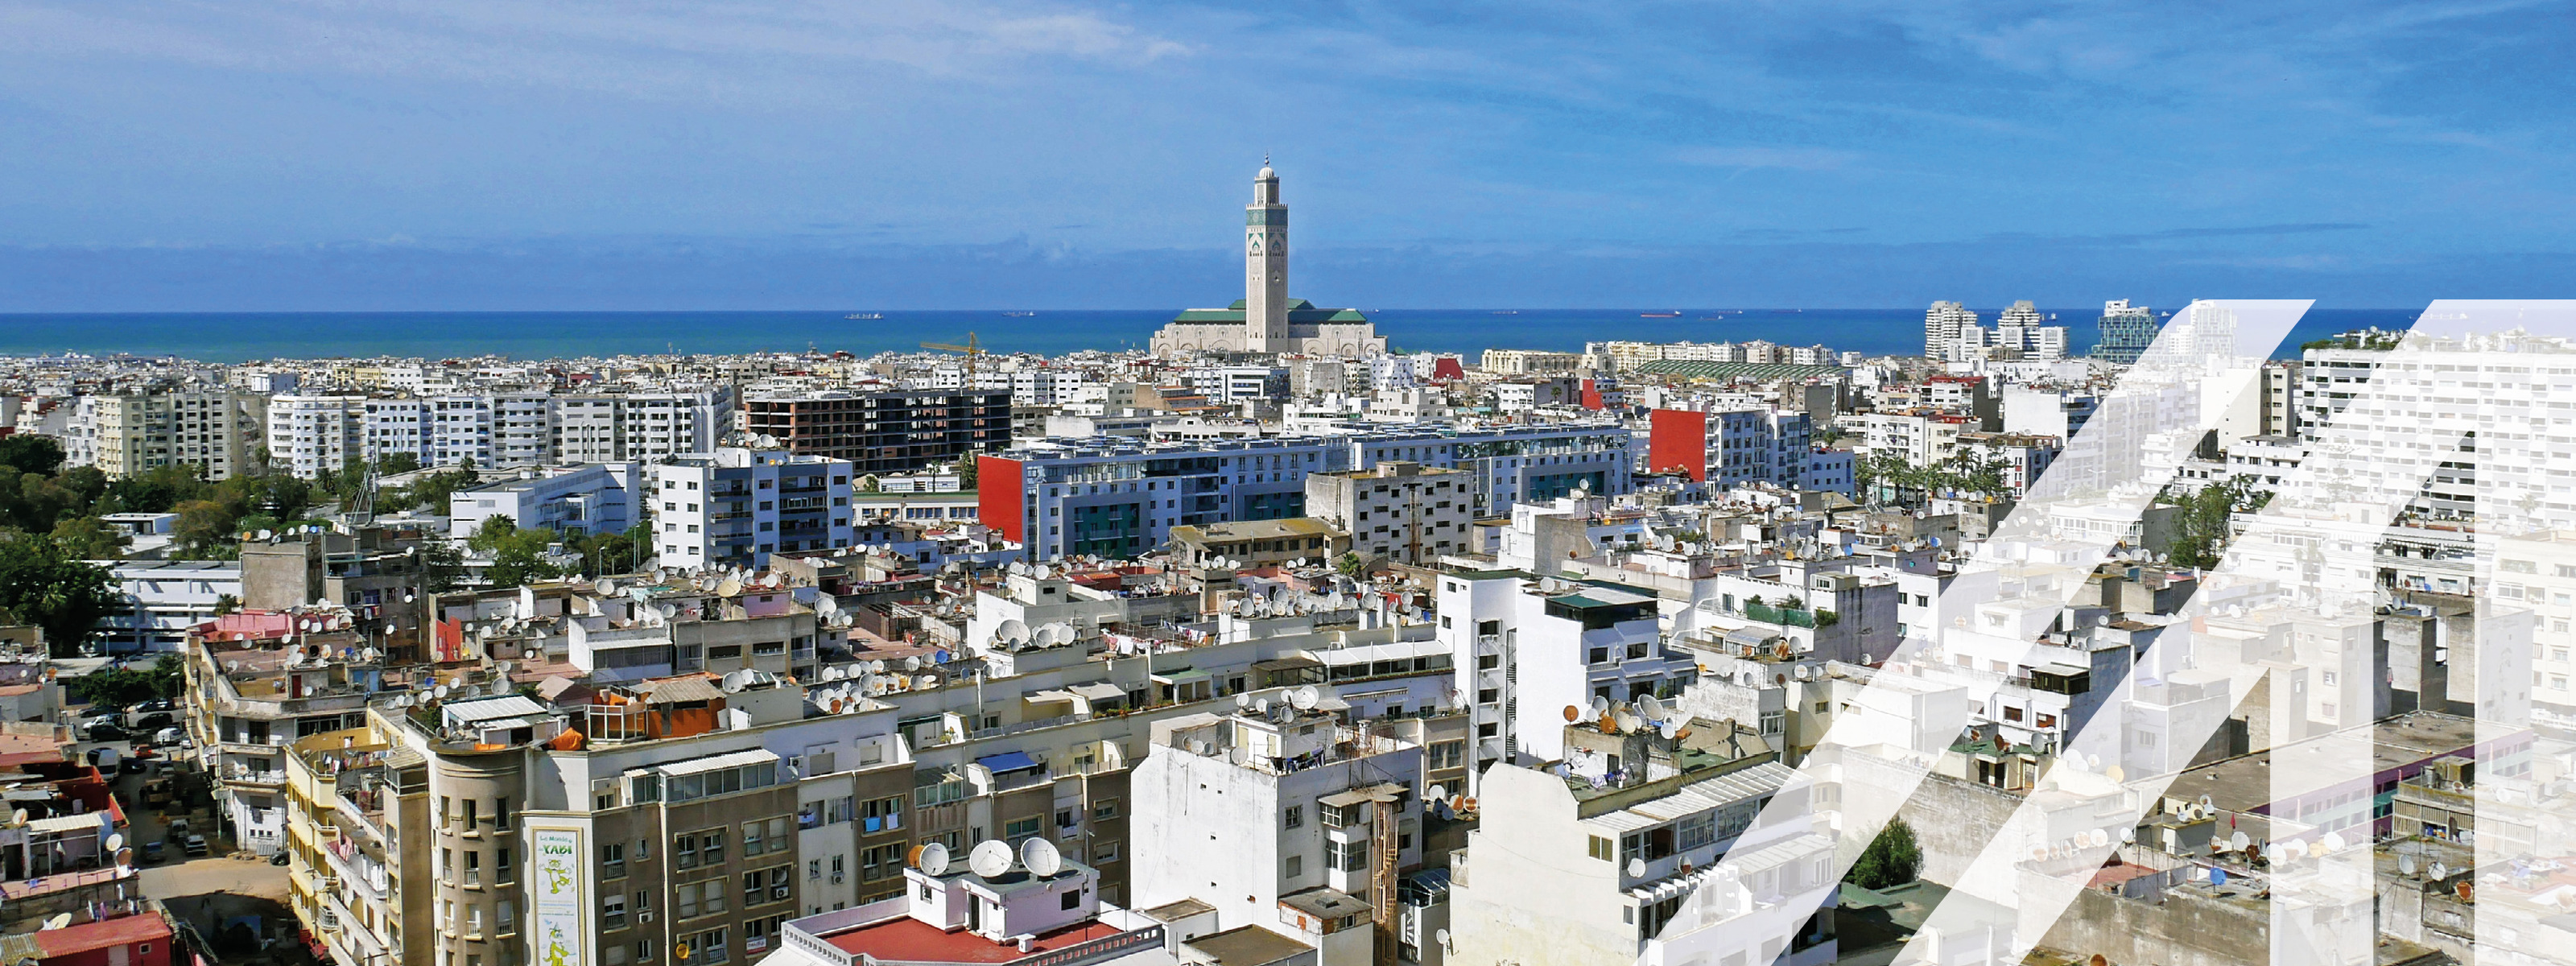 Panoramablick auf Casablanca, der Turm der Hassan II Moschee ragt hervor, unter blauem Himmel am Meer gelegen.
